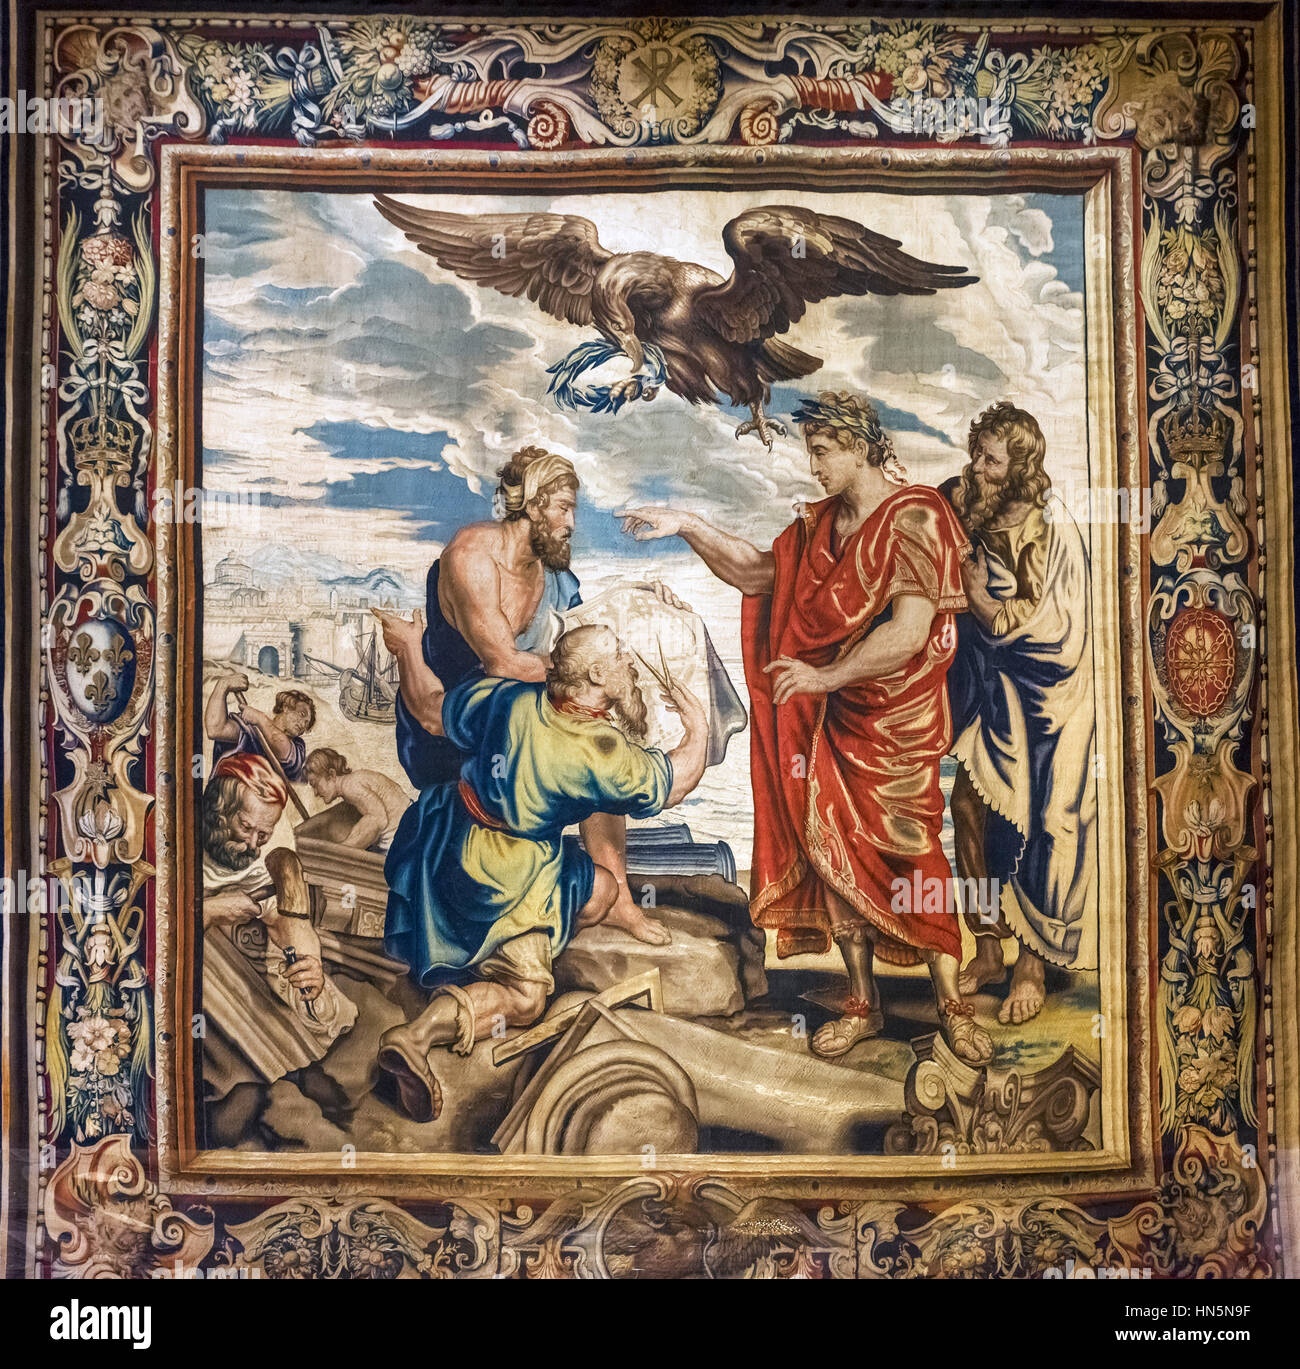 One of the twelve Constantine Tapestries designed by Peter Paul Rubens and Pietro de Cortona in the 1600s. The Tapestries depict the life of the Roman Emperor Constantine the Great. Stock Photo